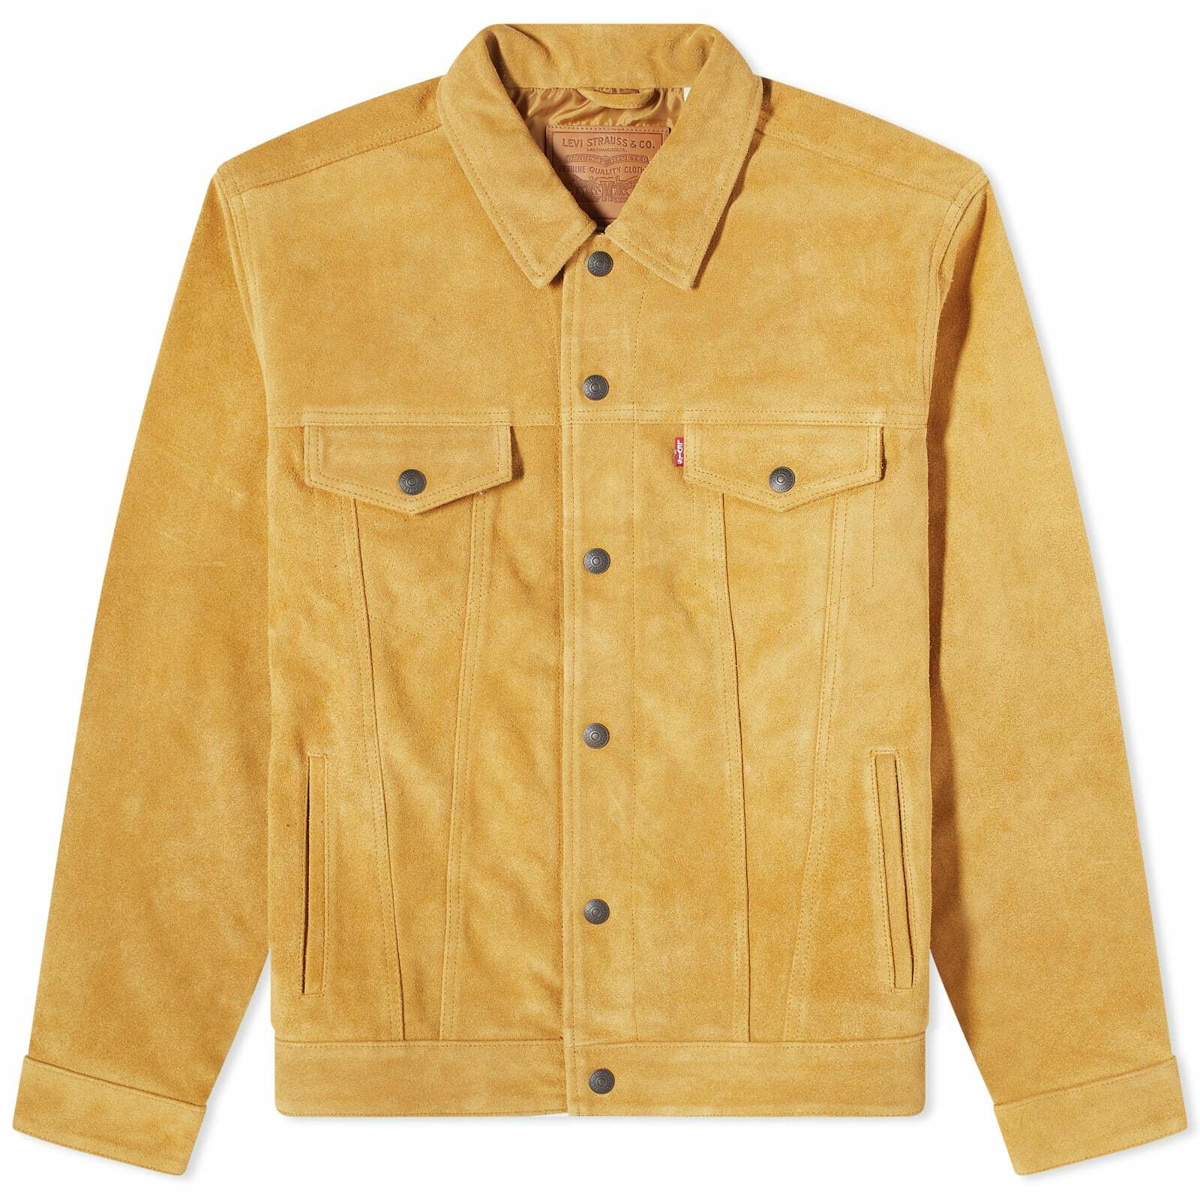 Levi's Men's Levis Vintage Clothing Trucker Jacket in Highland Suede Levis